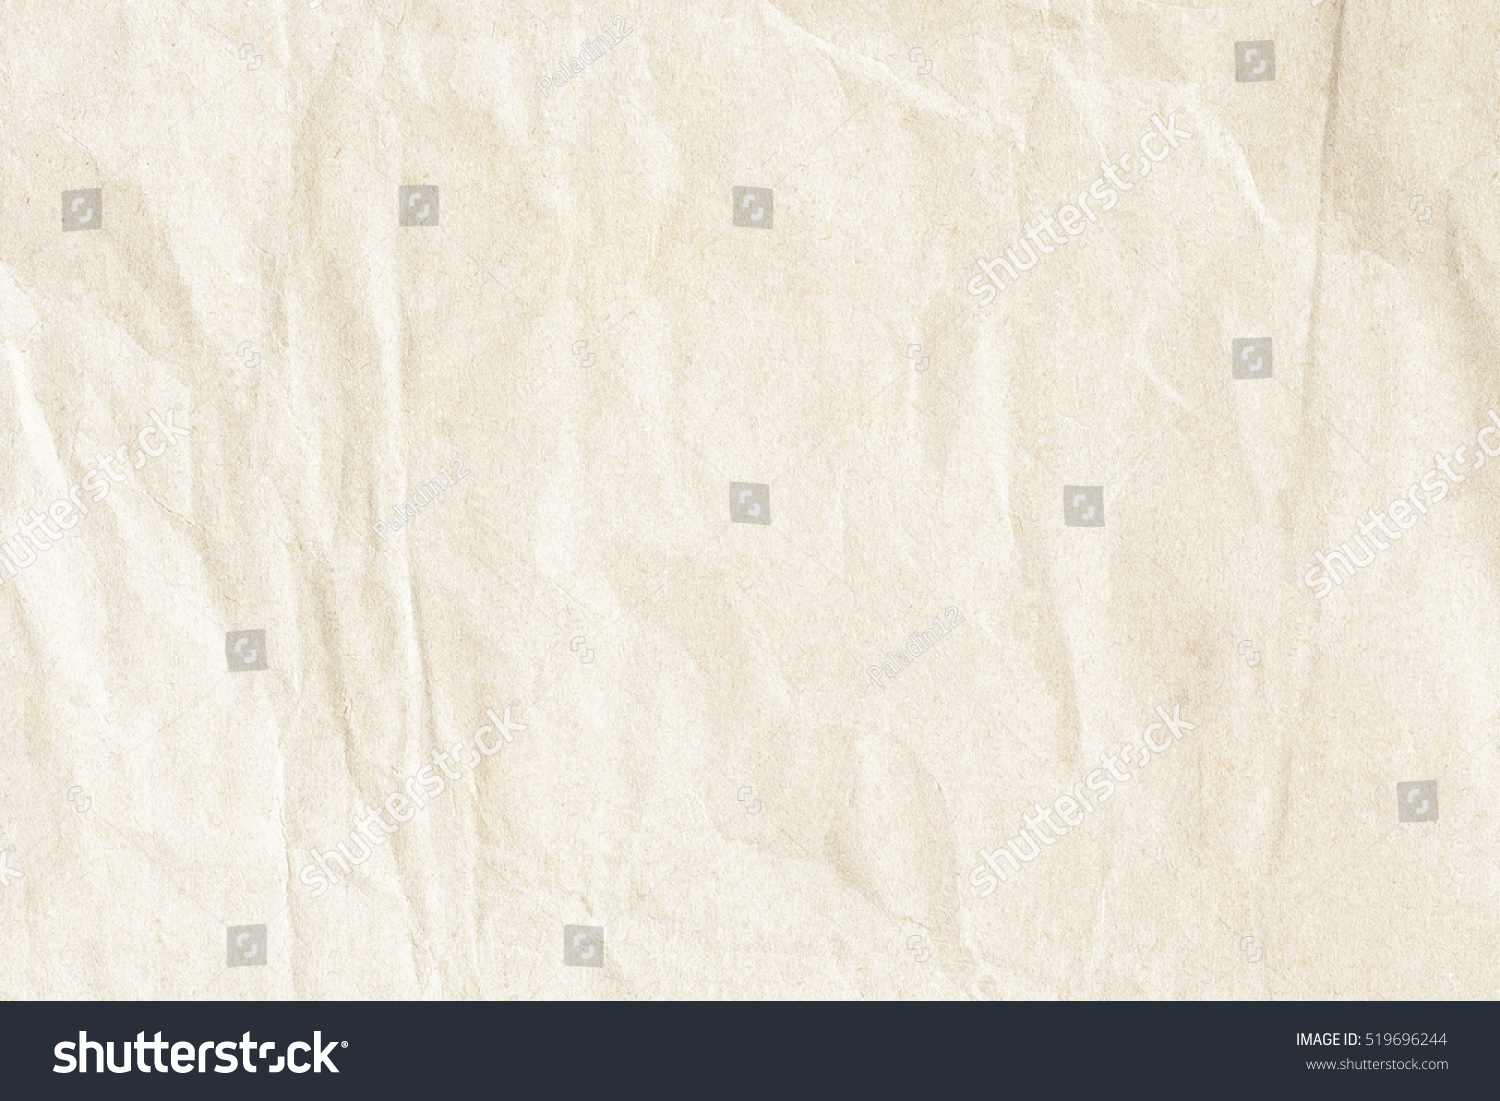 Brown crumpled paper texture #519696244